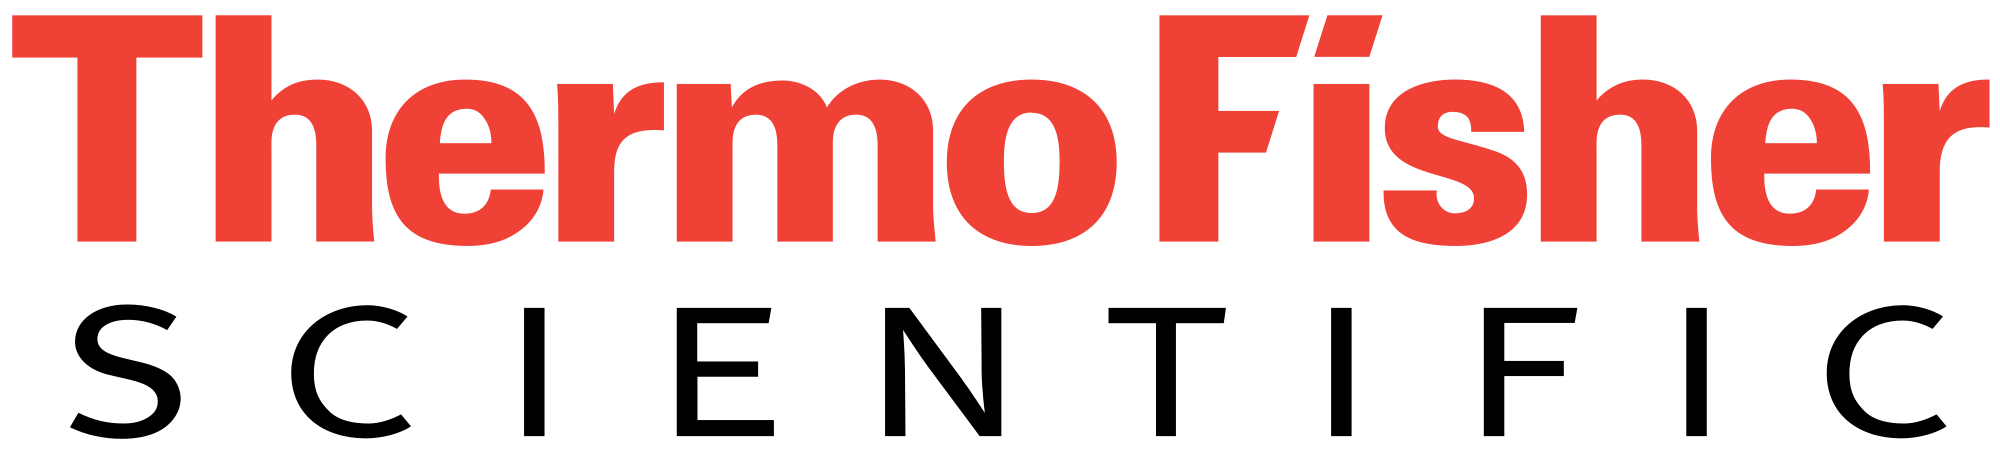 Thermofisher Scientific Brand Logo